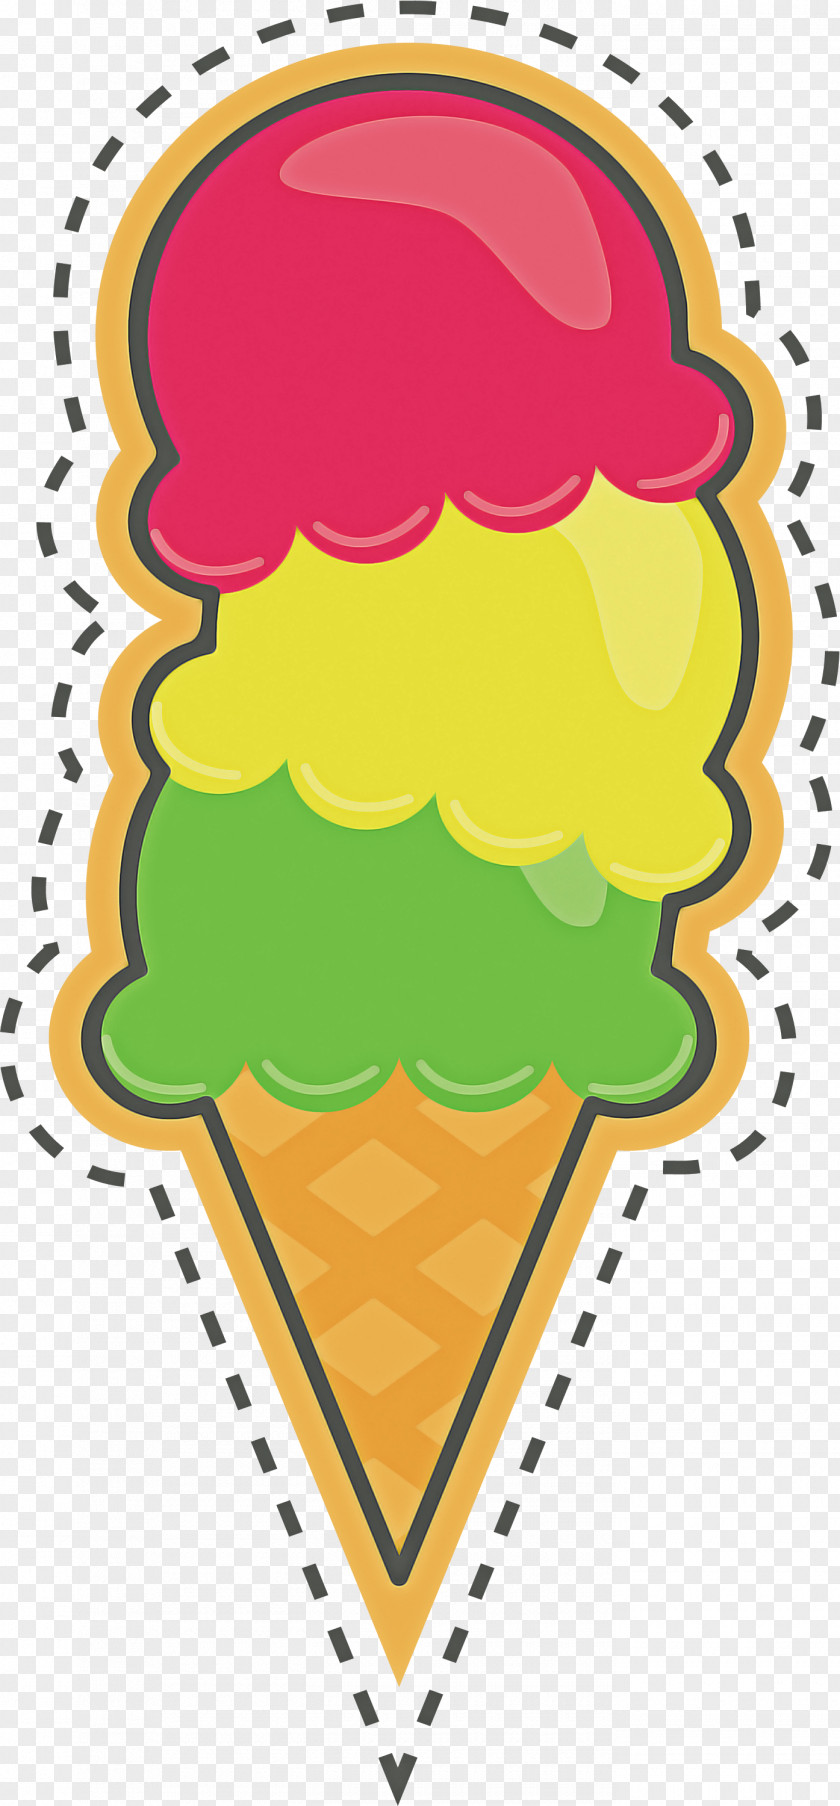 Ice Cream Cone Yellow Frozen Dessert PNG